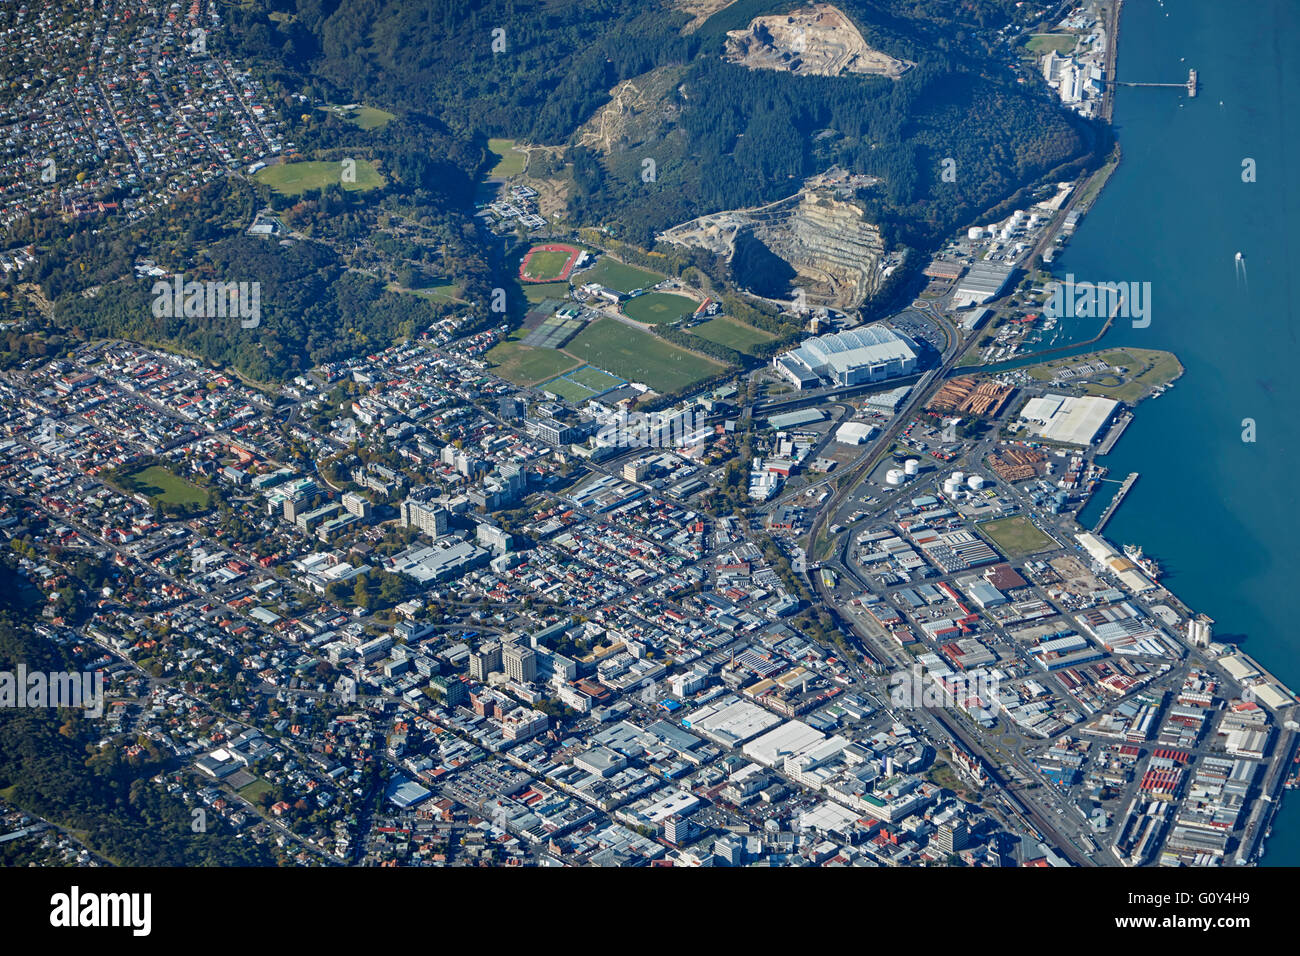 University of Otago, Hospital, Stadium and Otago Harbour, Dunedin, Otago, South Island, New Zealand - aerial Stock Photo